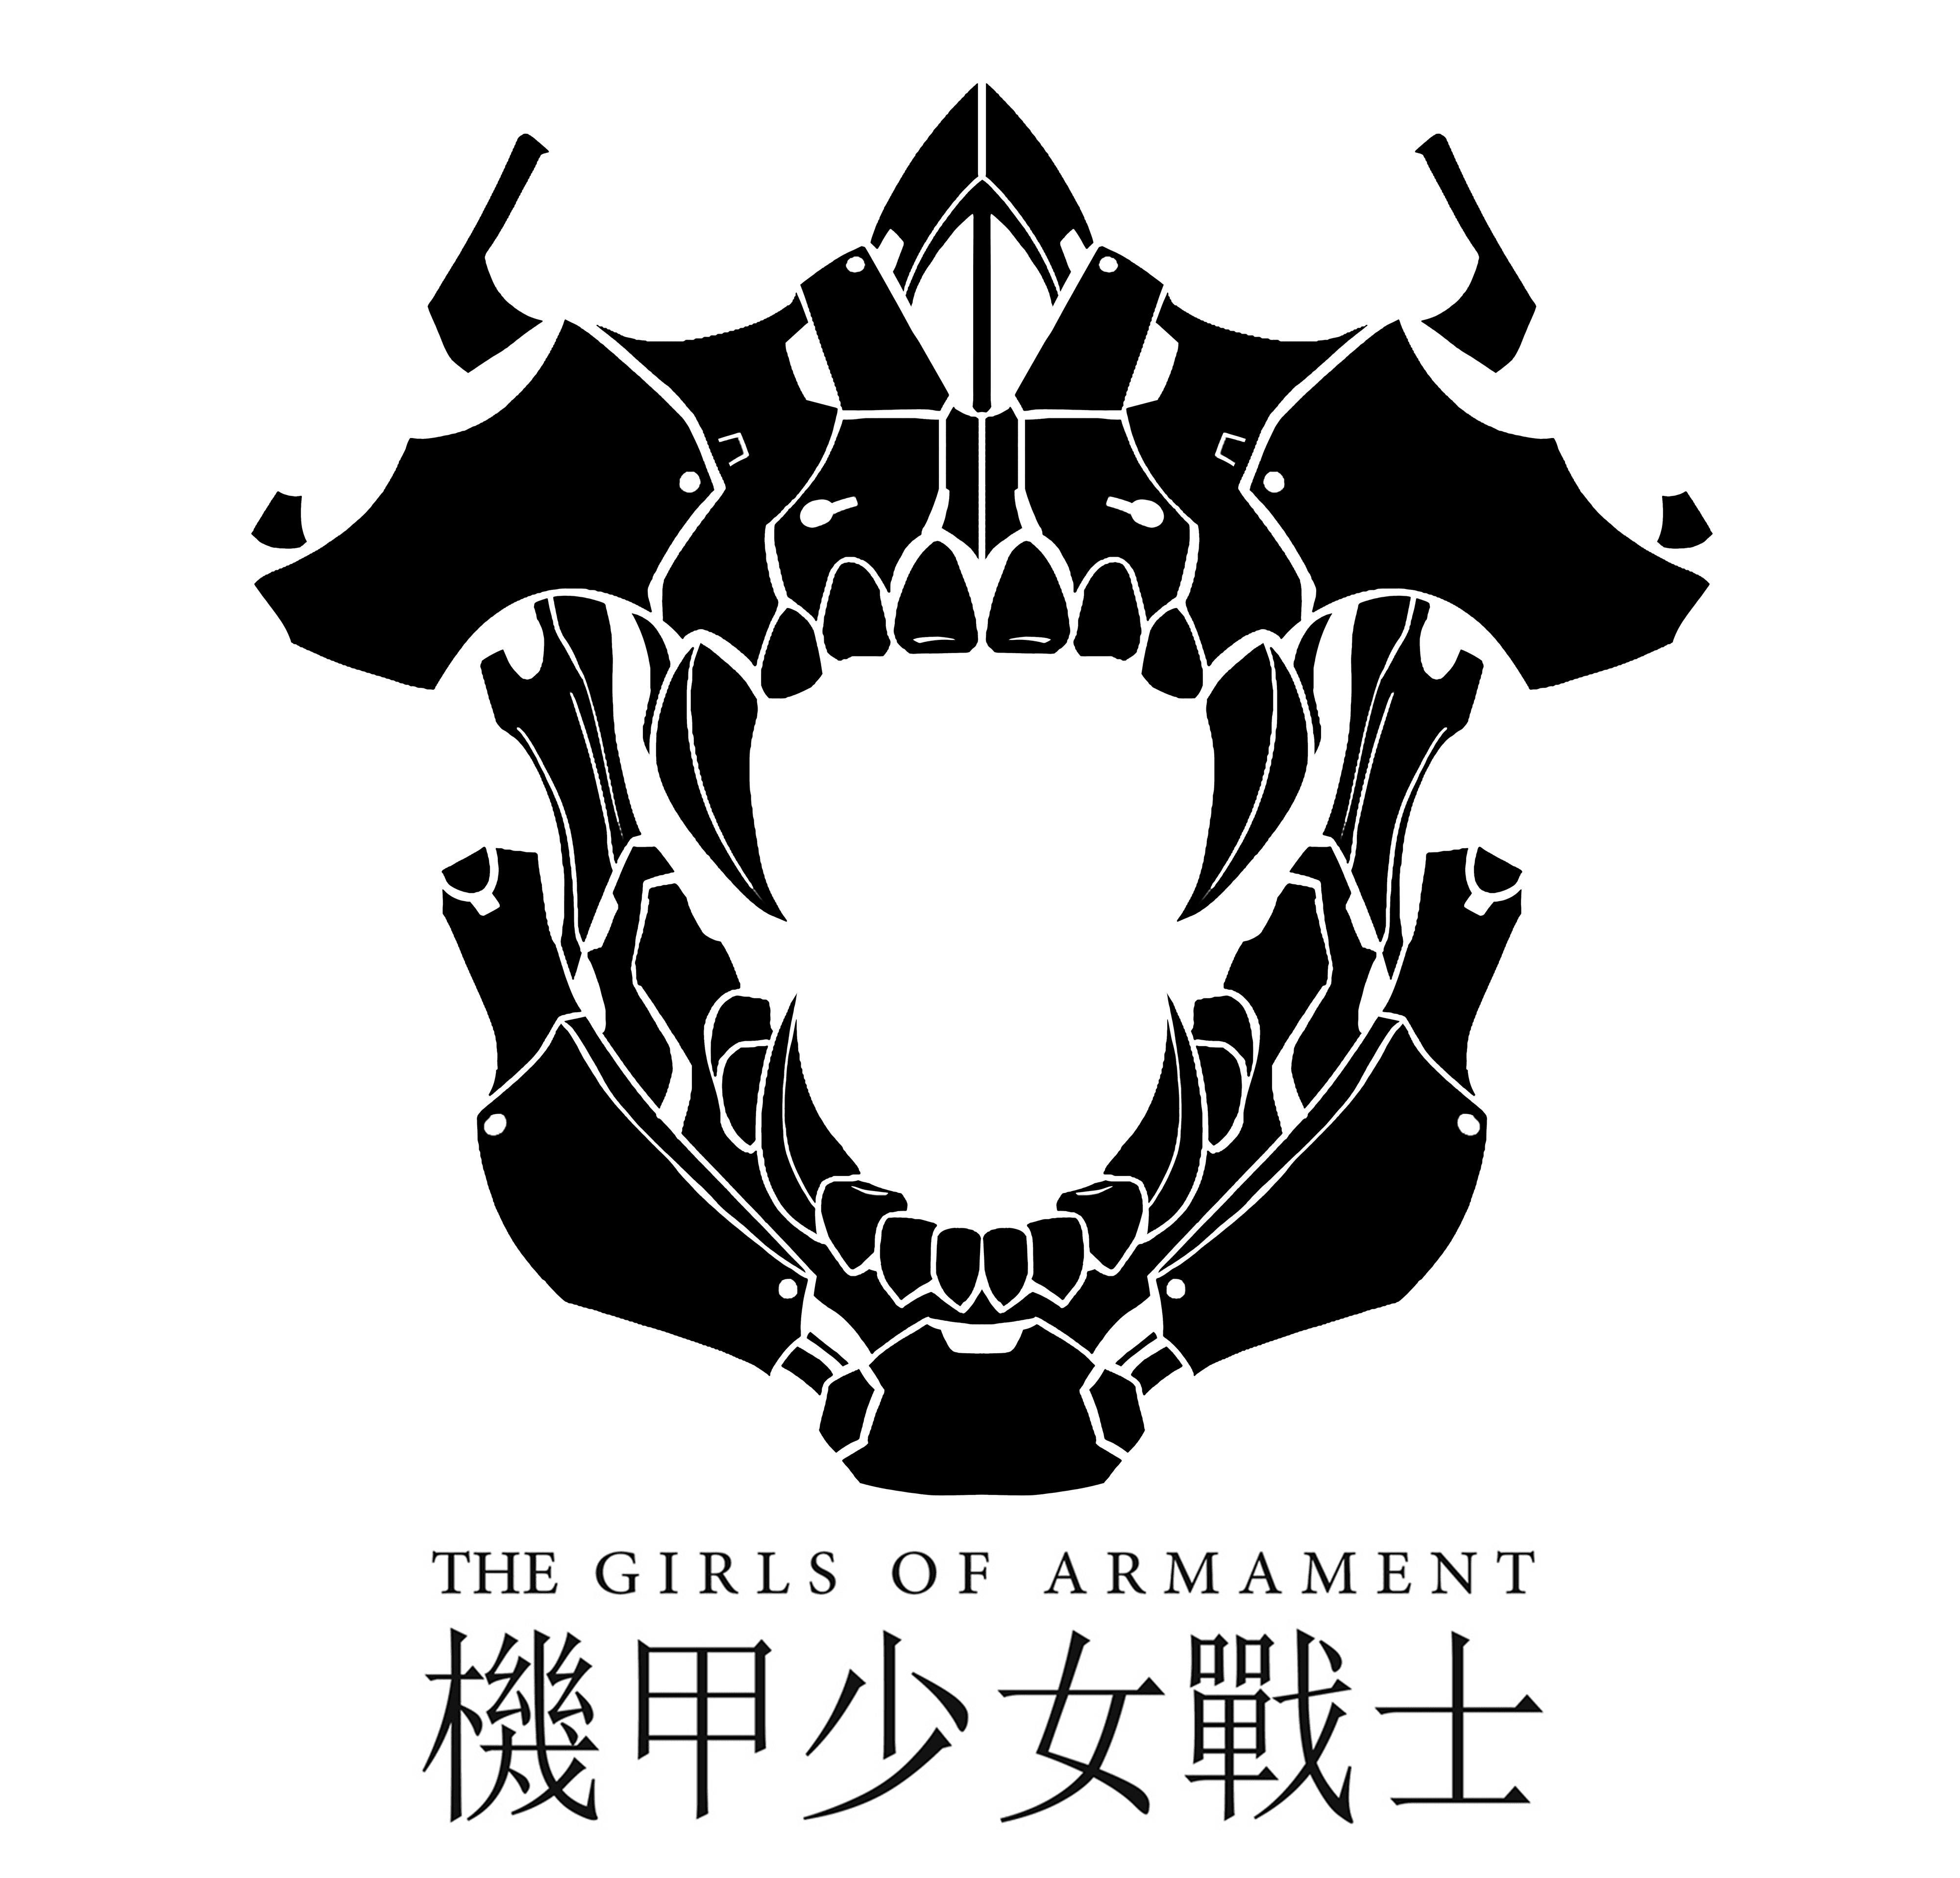 TheGirlsofArmament